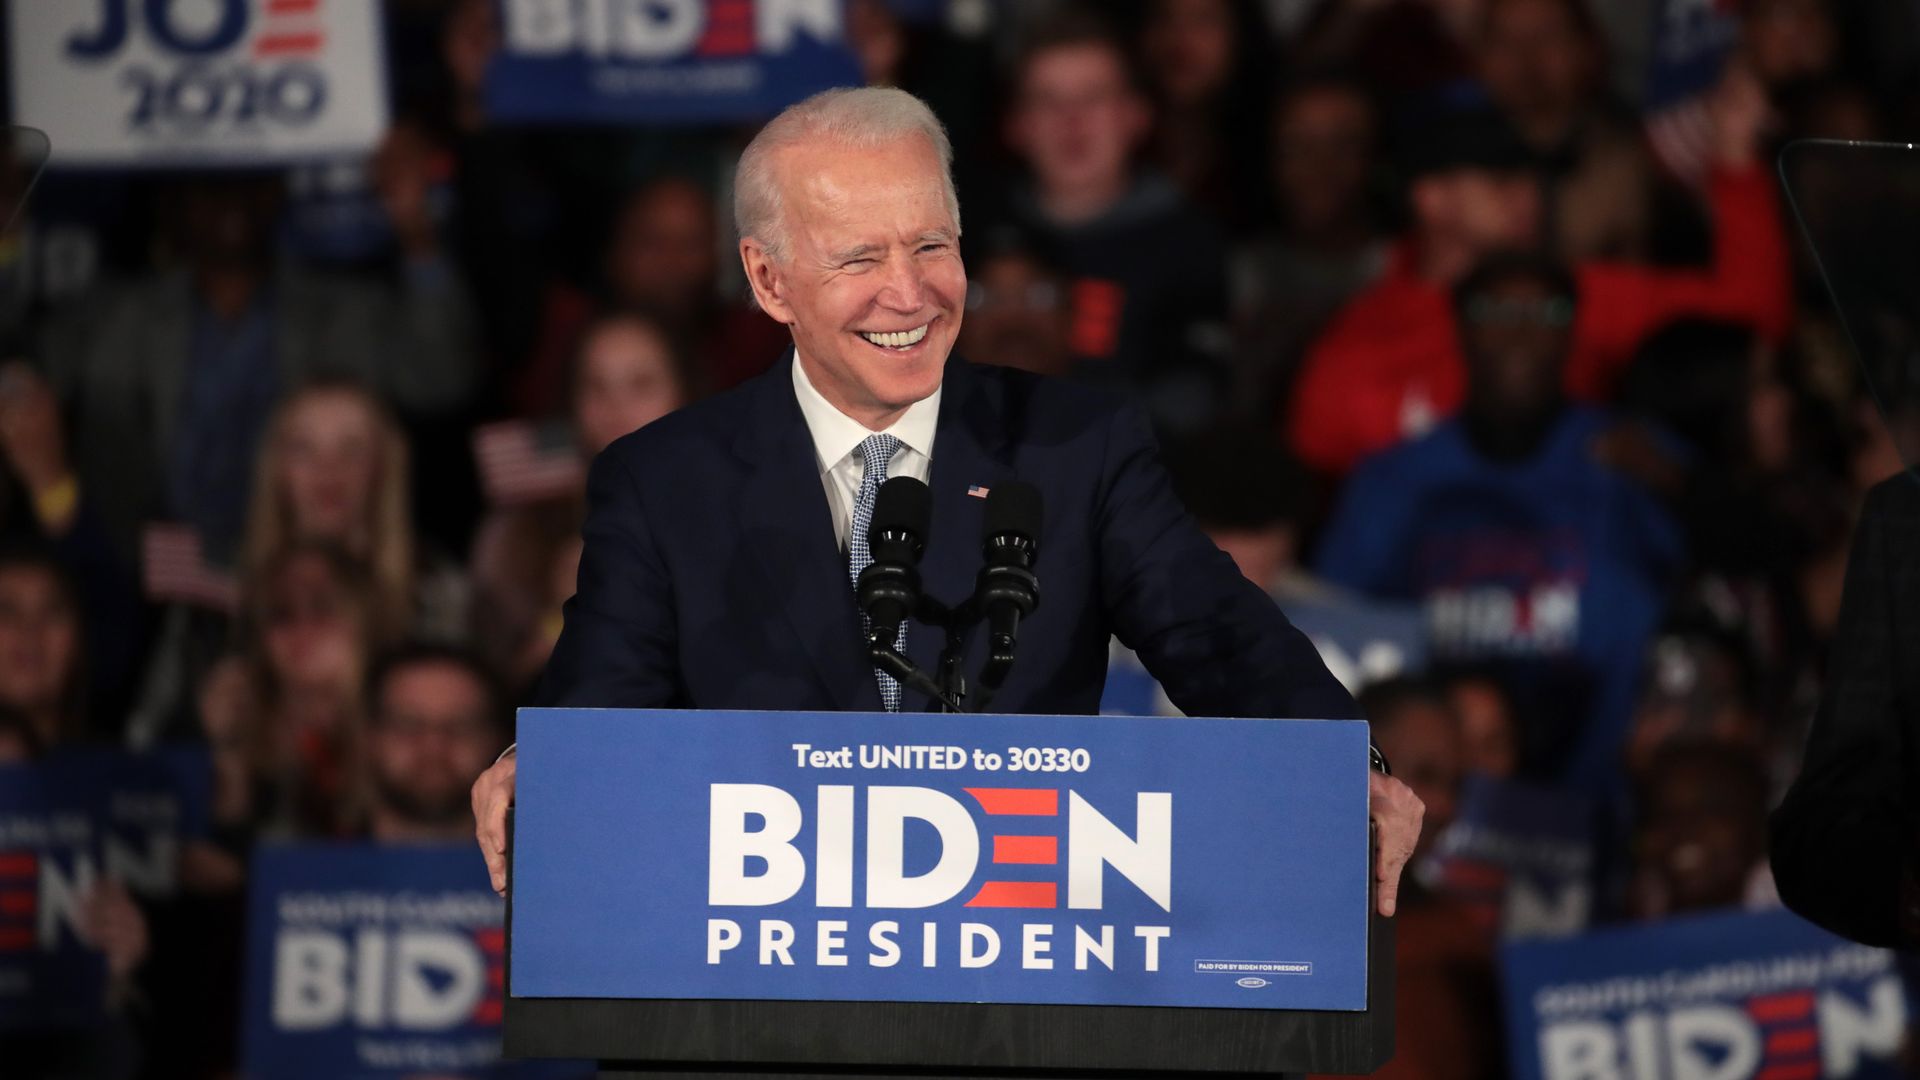 Biden at a podium.